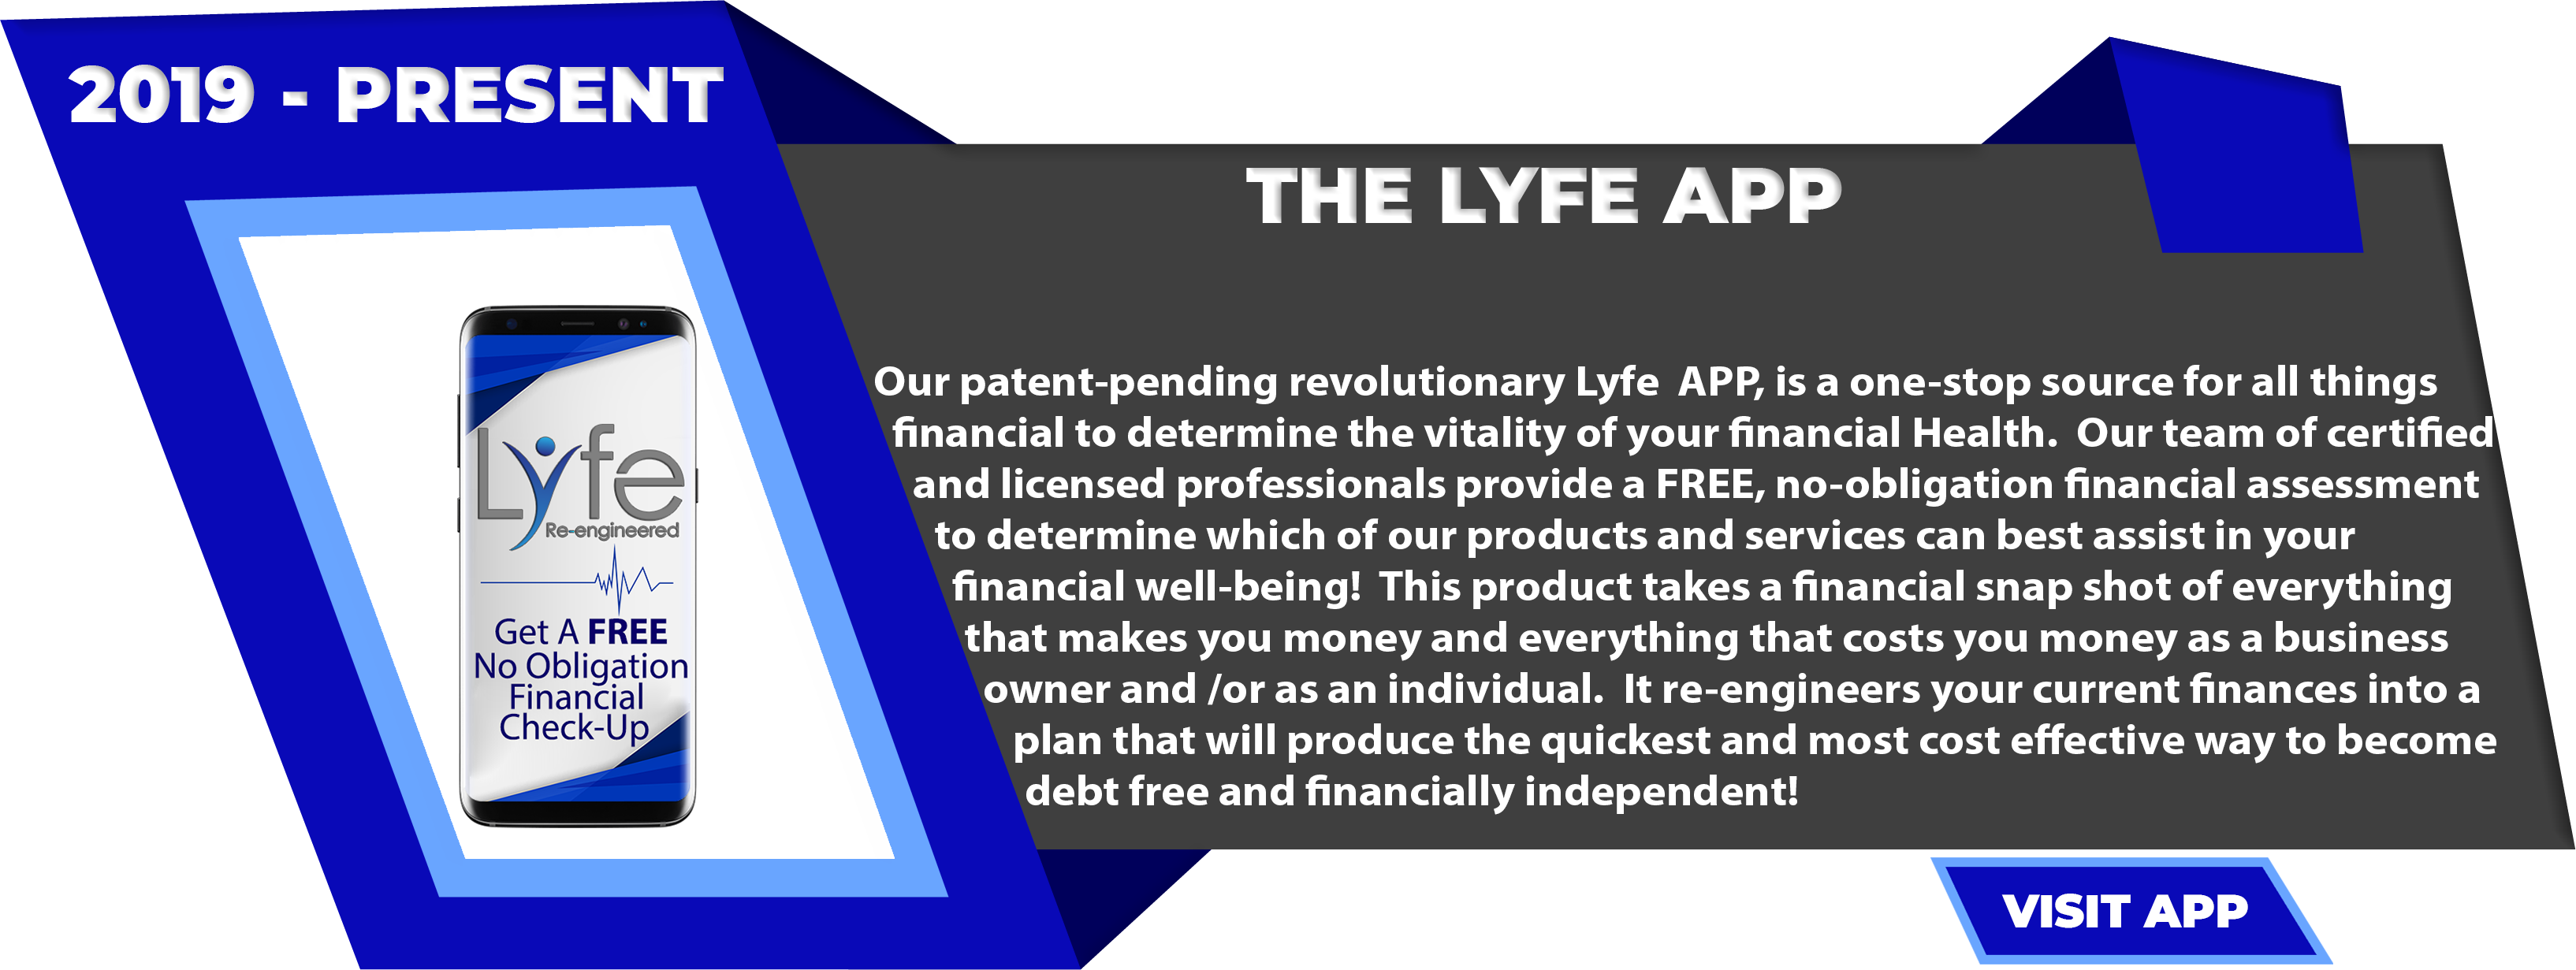 The-Lyfe-App-2019-2